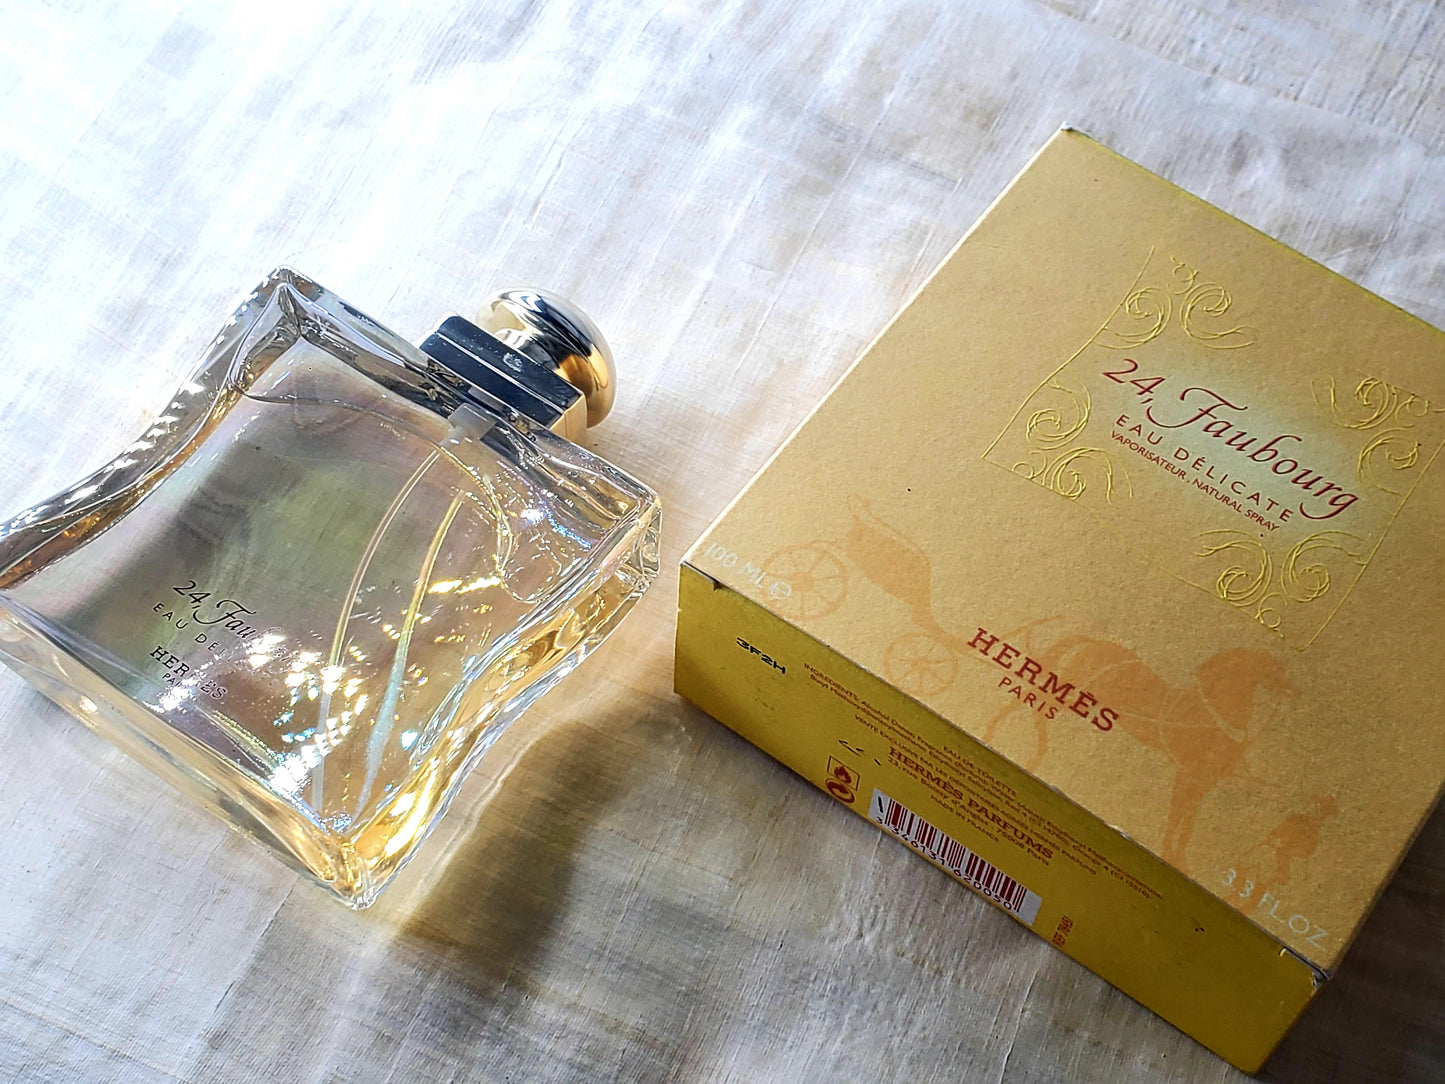 24 Faubourg Eau Delicate Hermes for women EDT Spray 100 ml 3.4 oz Or 50 ml 1.7 oz, Vintage, Rare, Sealed